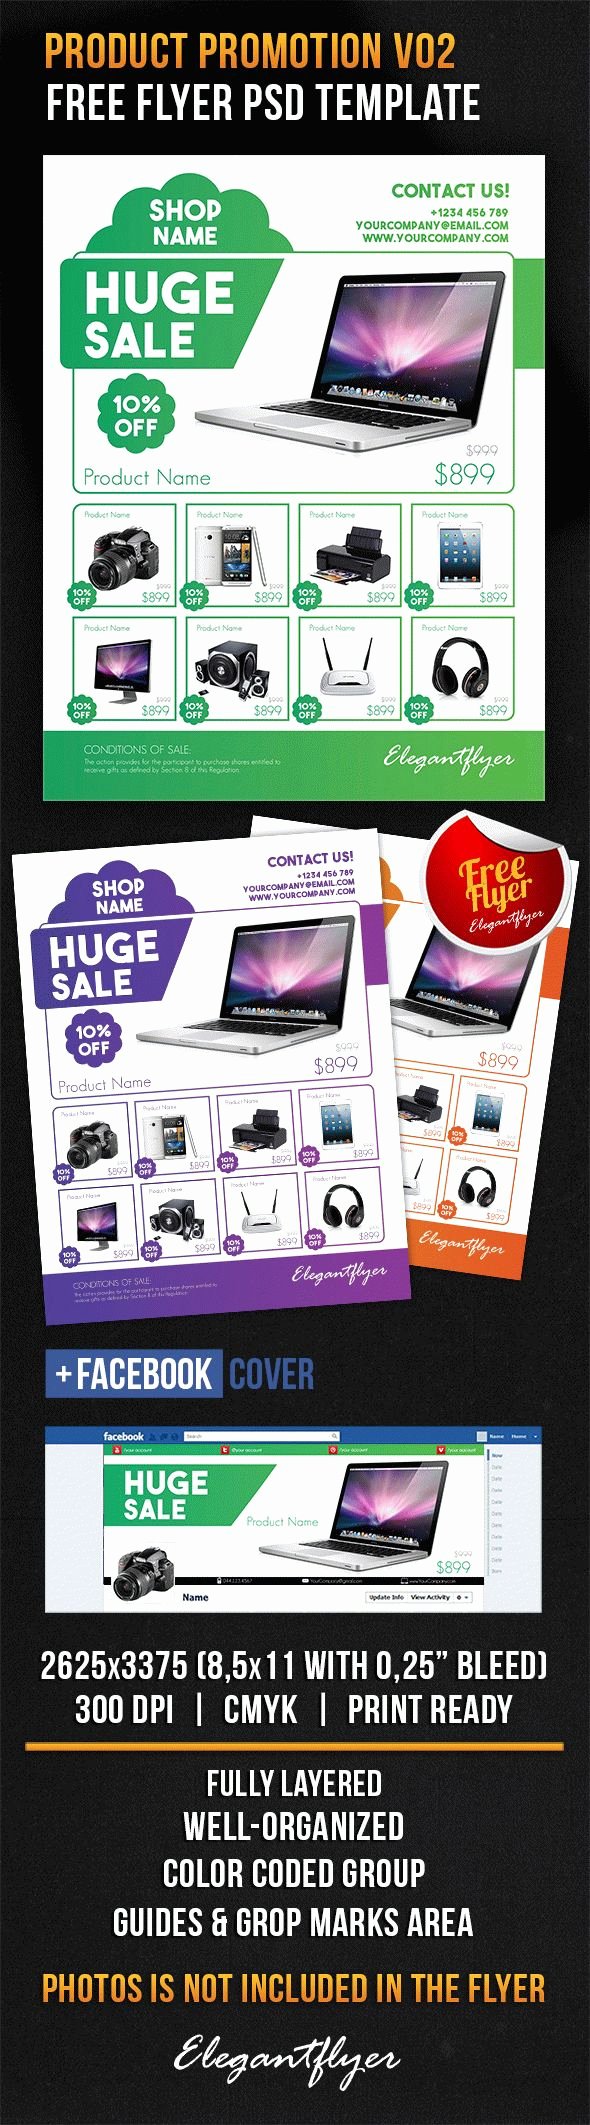 Promotion Flyer Template Free Inspirational Flyer for Product Promotion – by Elegantflyer